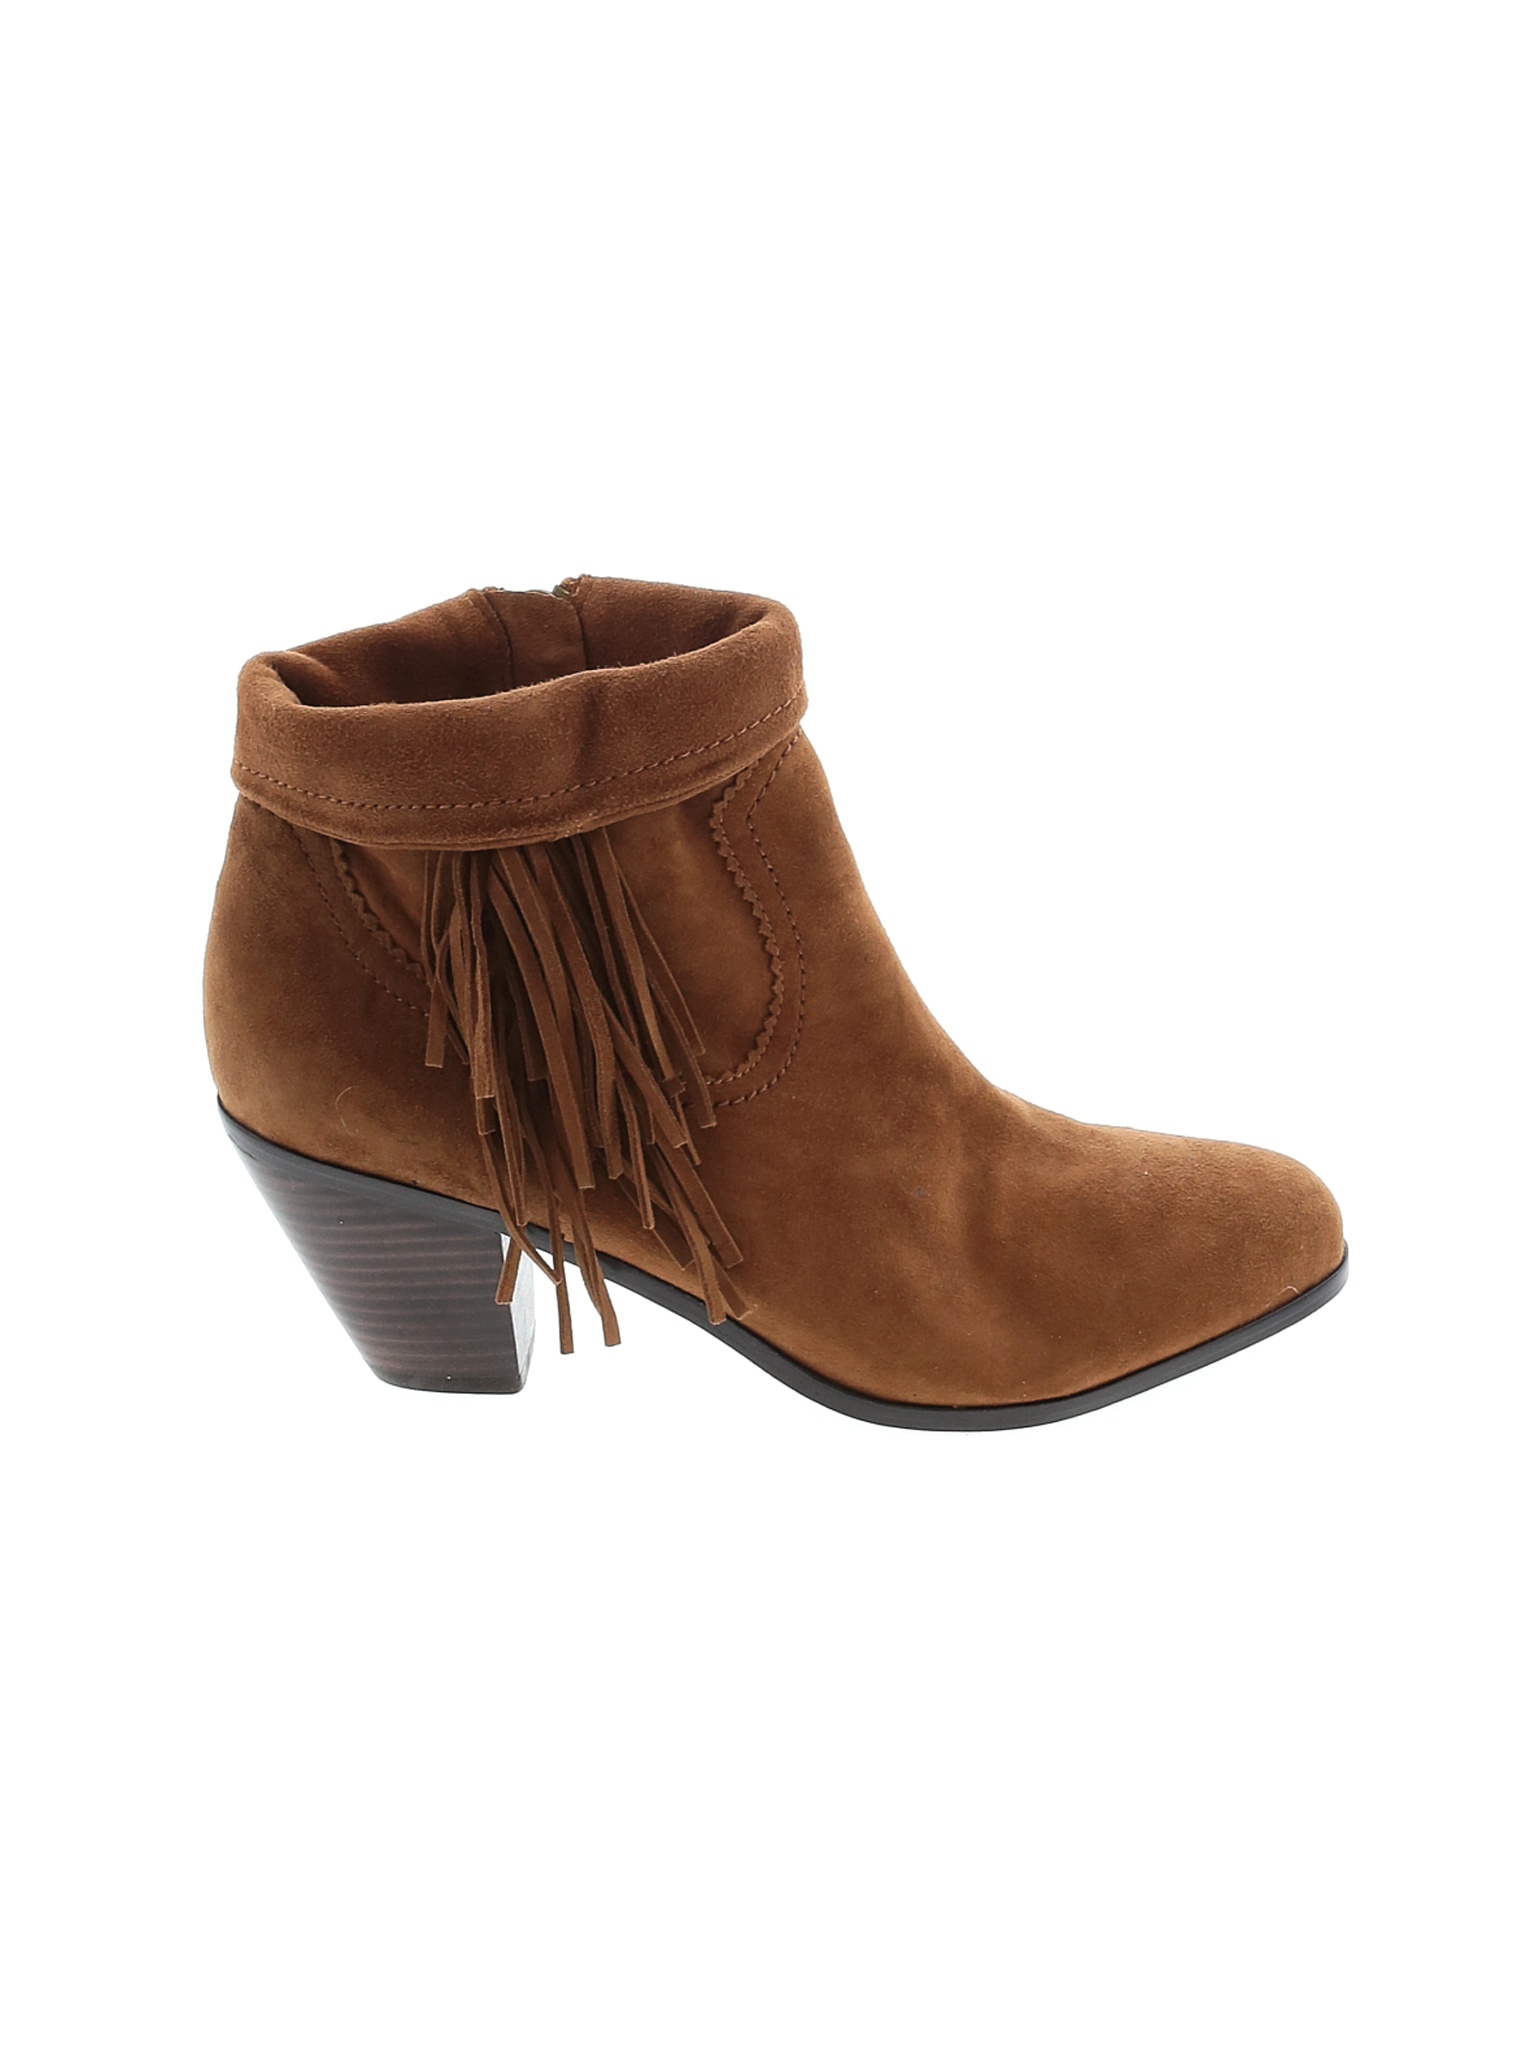 Sam Edelman Women Brown Ankle Boots US 12 | eBay